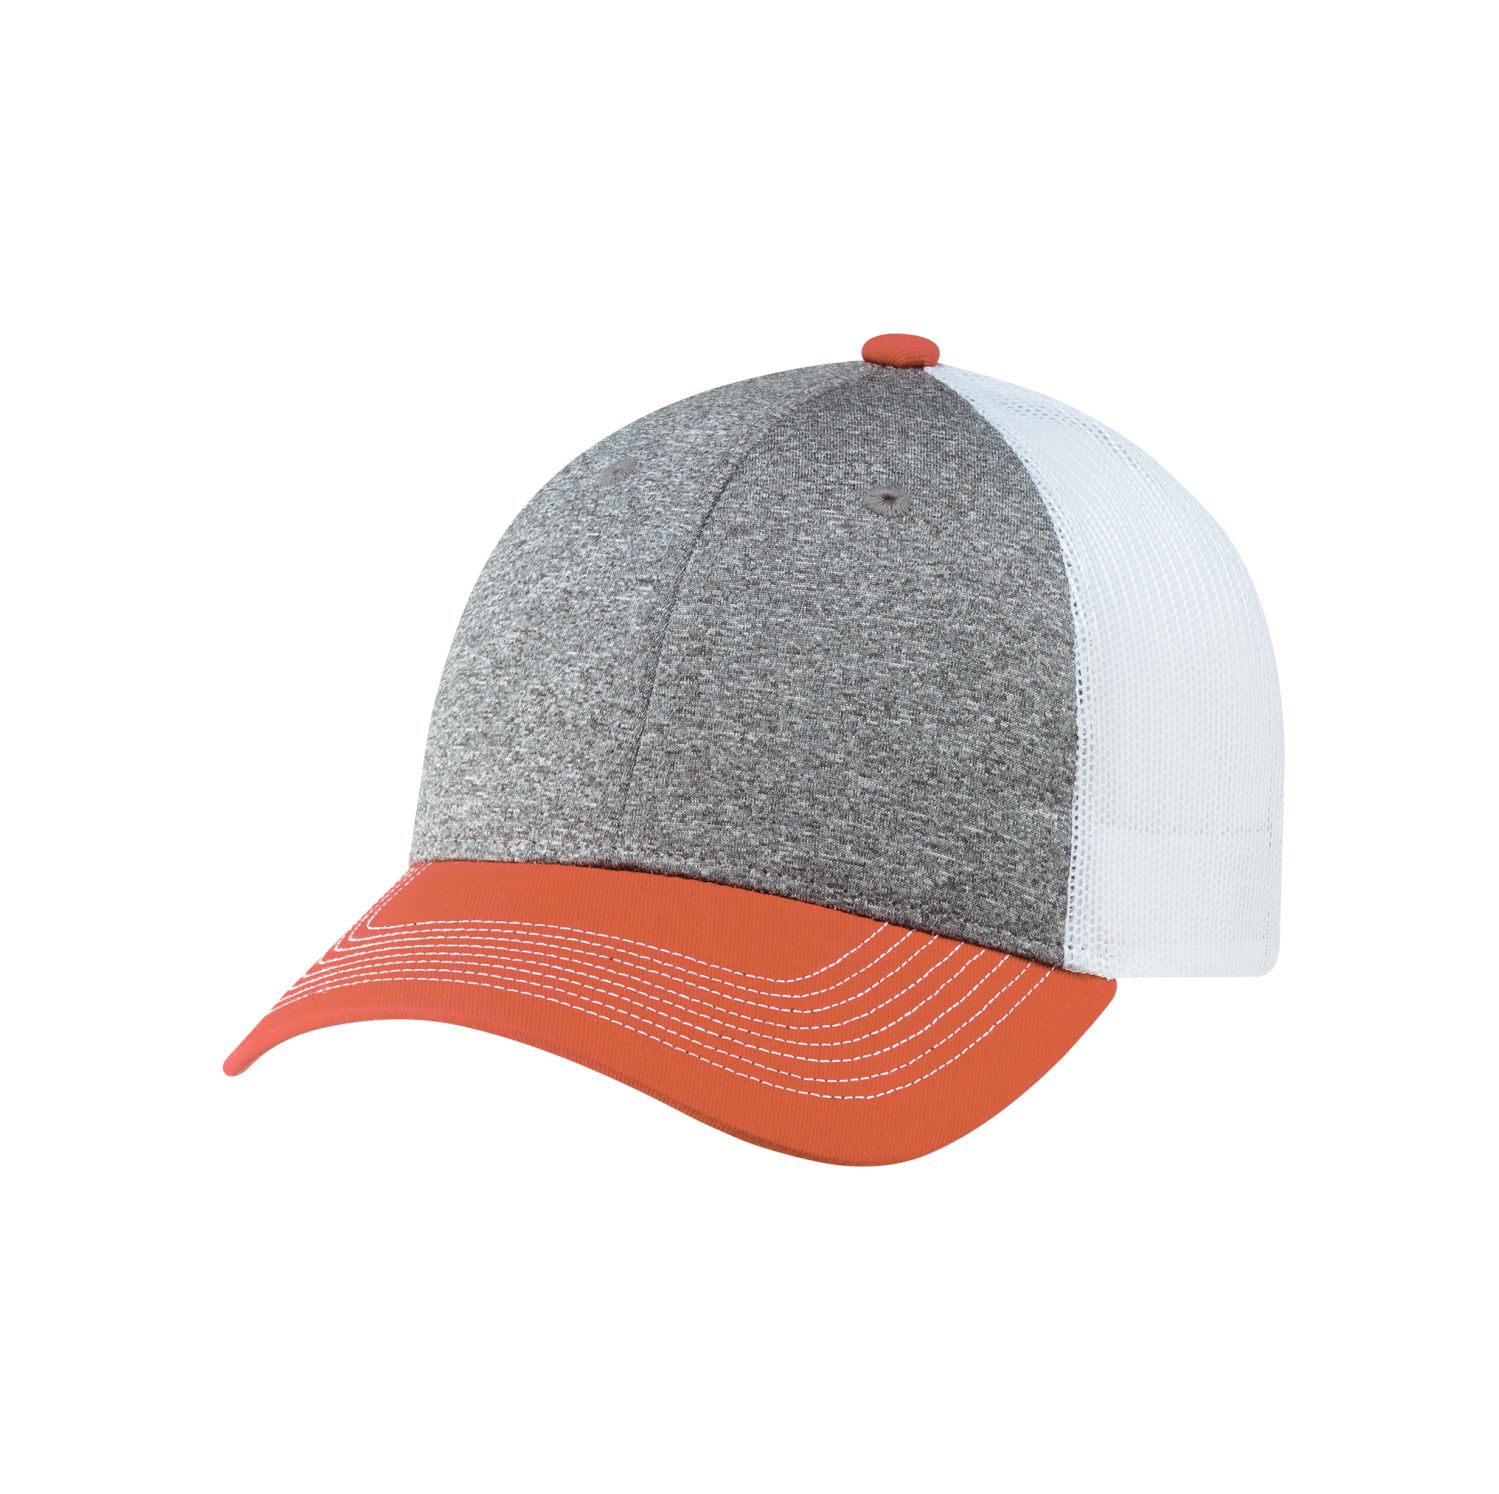 AJM Cotton Drill / Polyester Heather / Nylon Mesh 6 Panel Constructed Full-Fit Hat (Mesh Back) #4G645M Orange / Charcoal / White